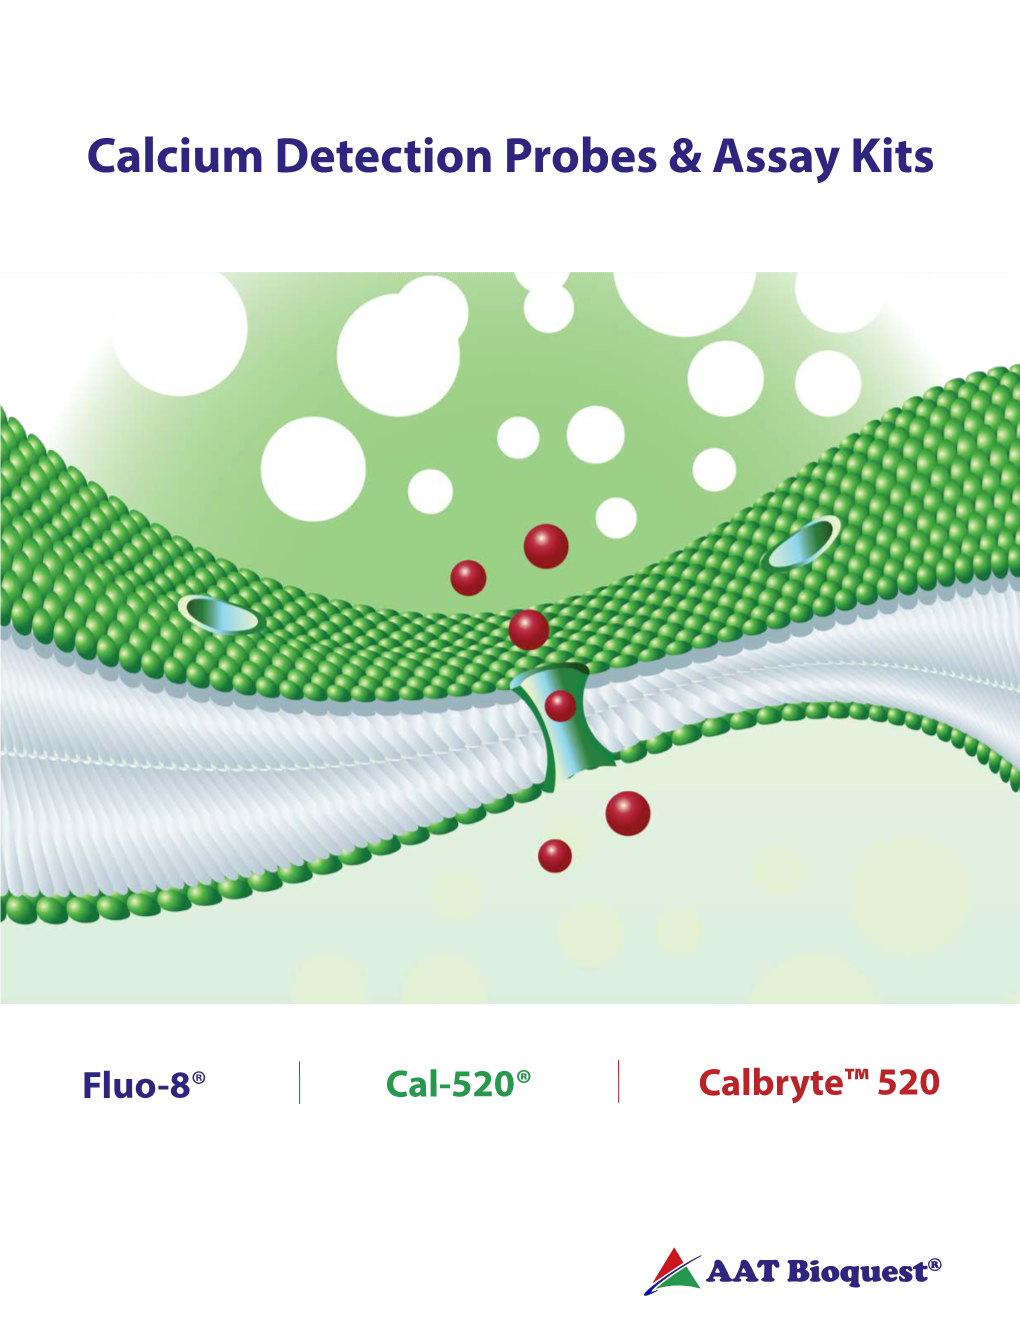 Calcium Detection Probes & Assay Kits